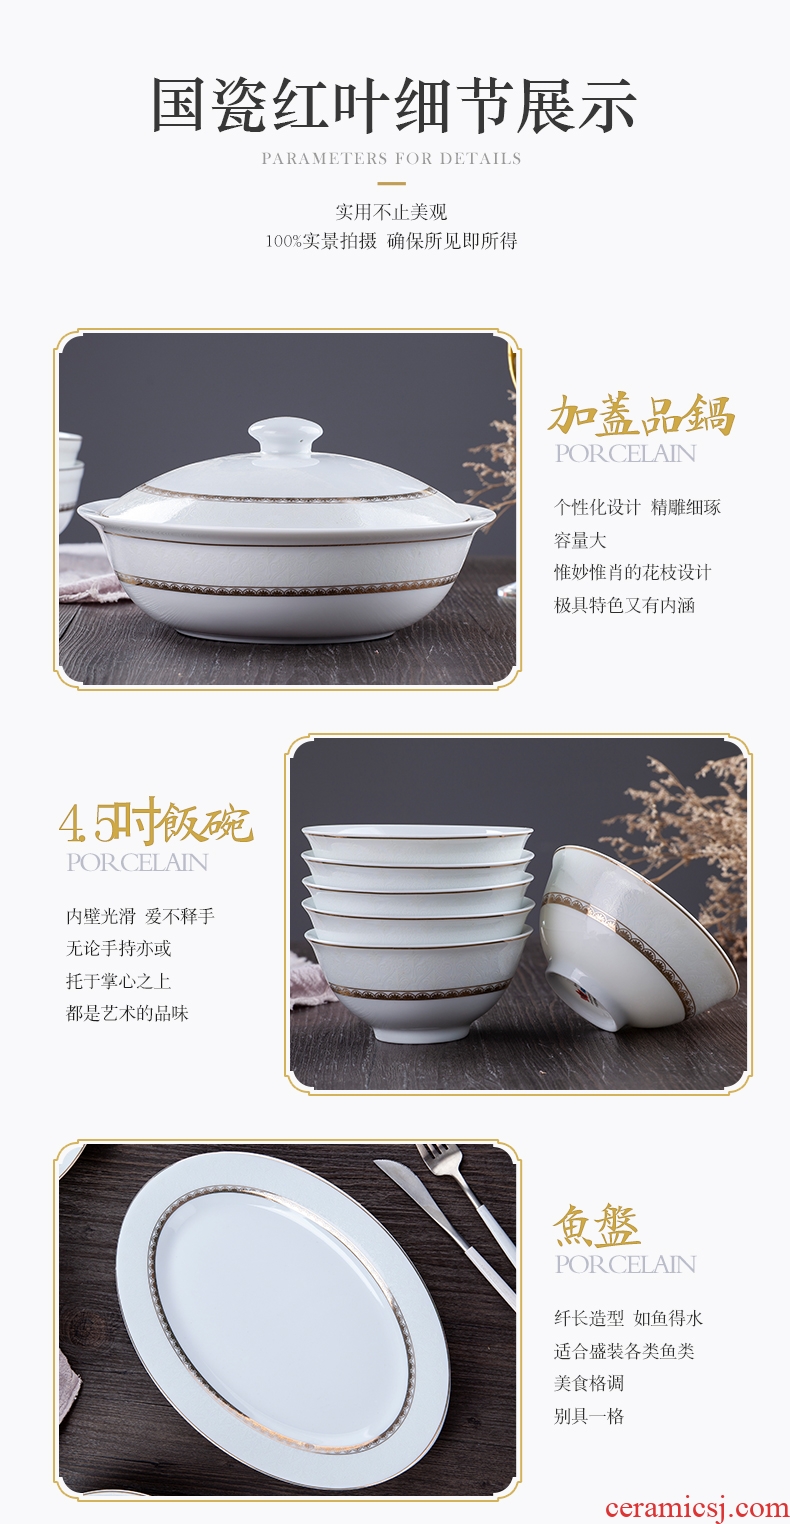 Red porcelain jingdezhen fine white porcelain dishes home European dish bowl of soup bowl dish dish dish separates the parts